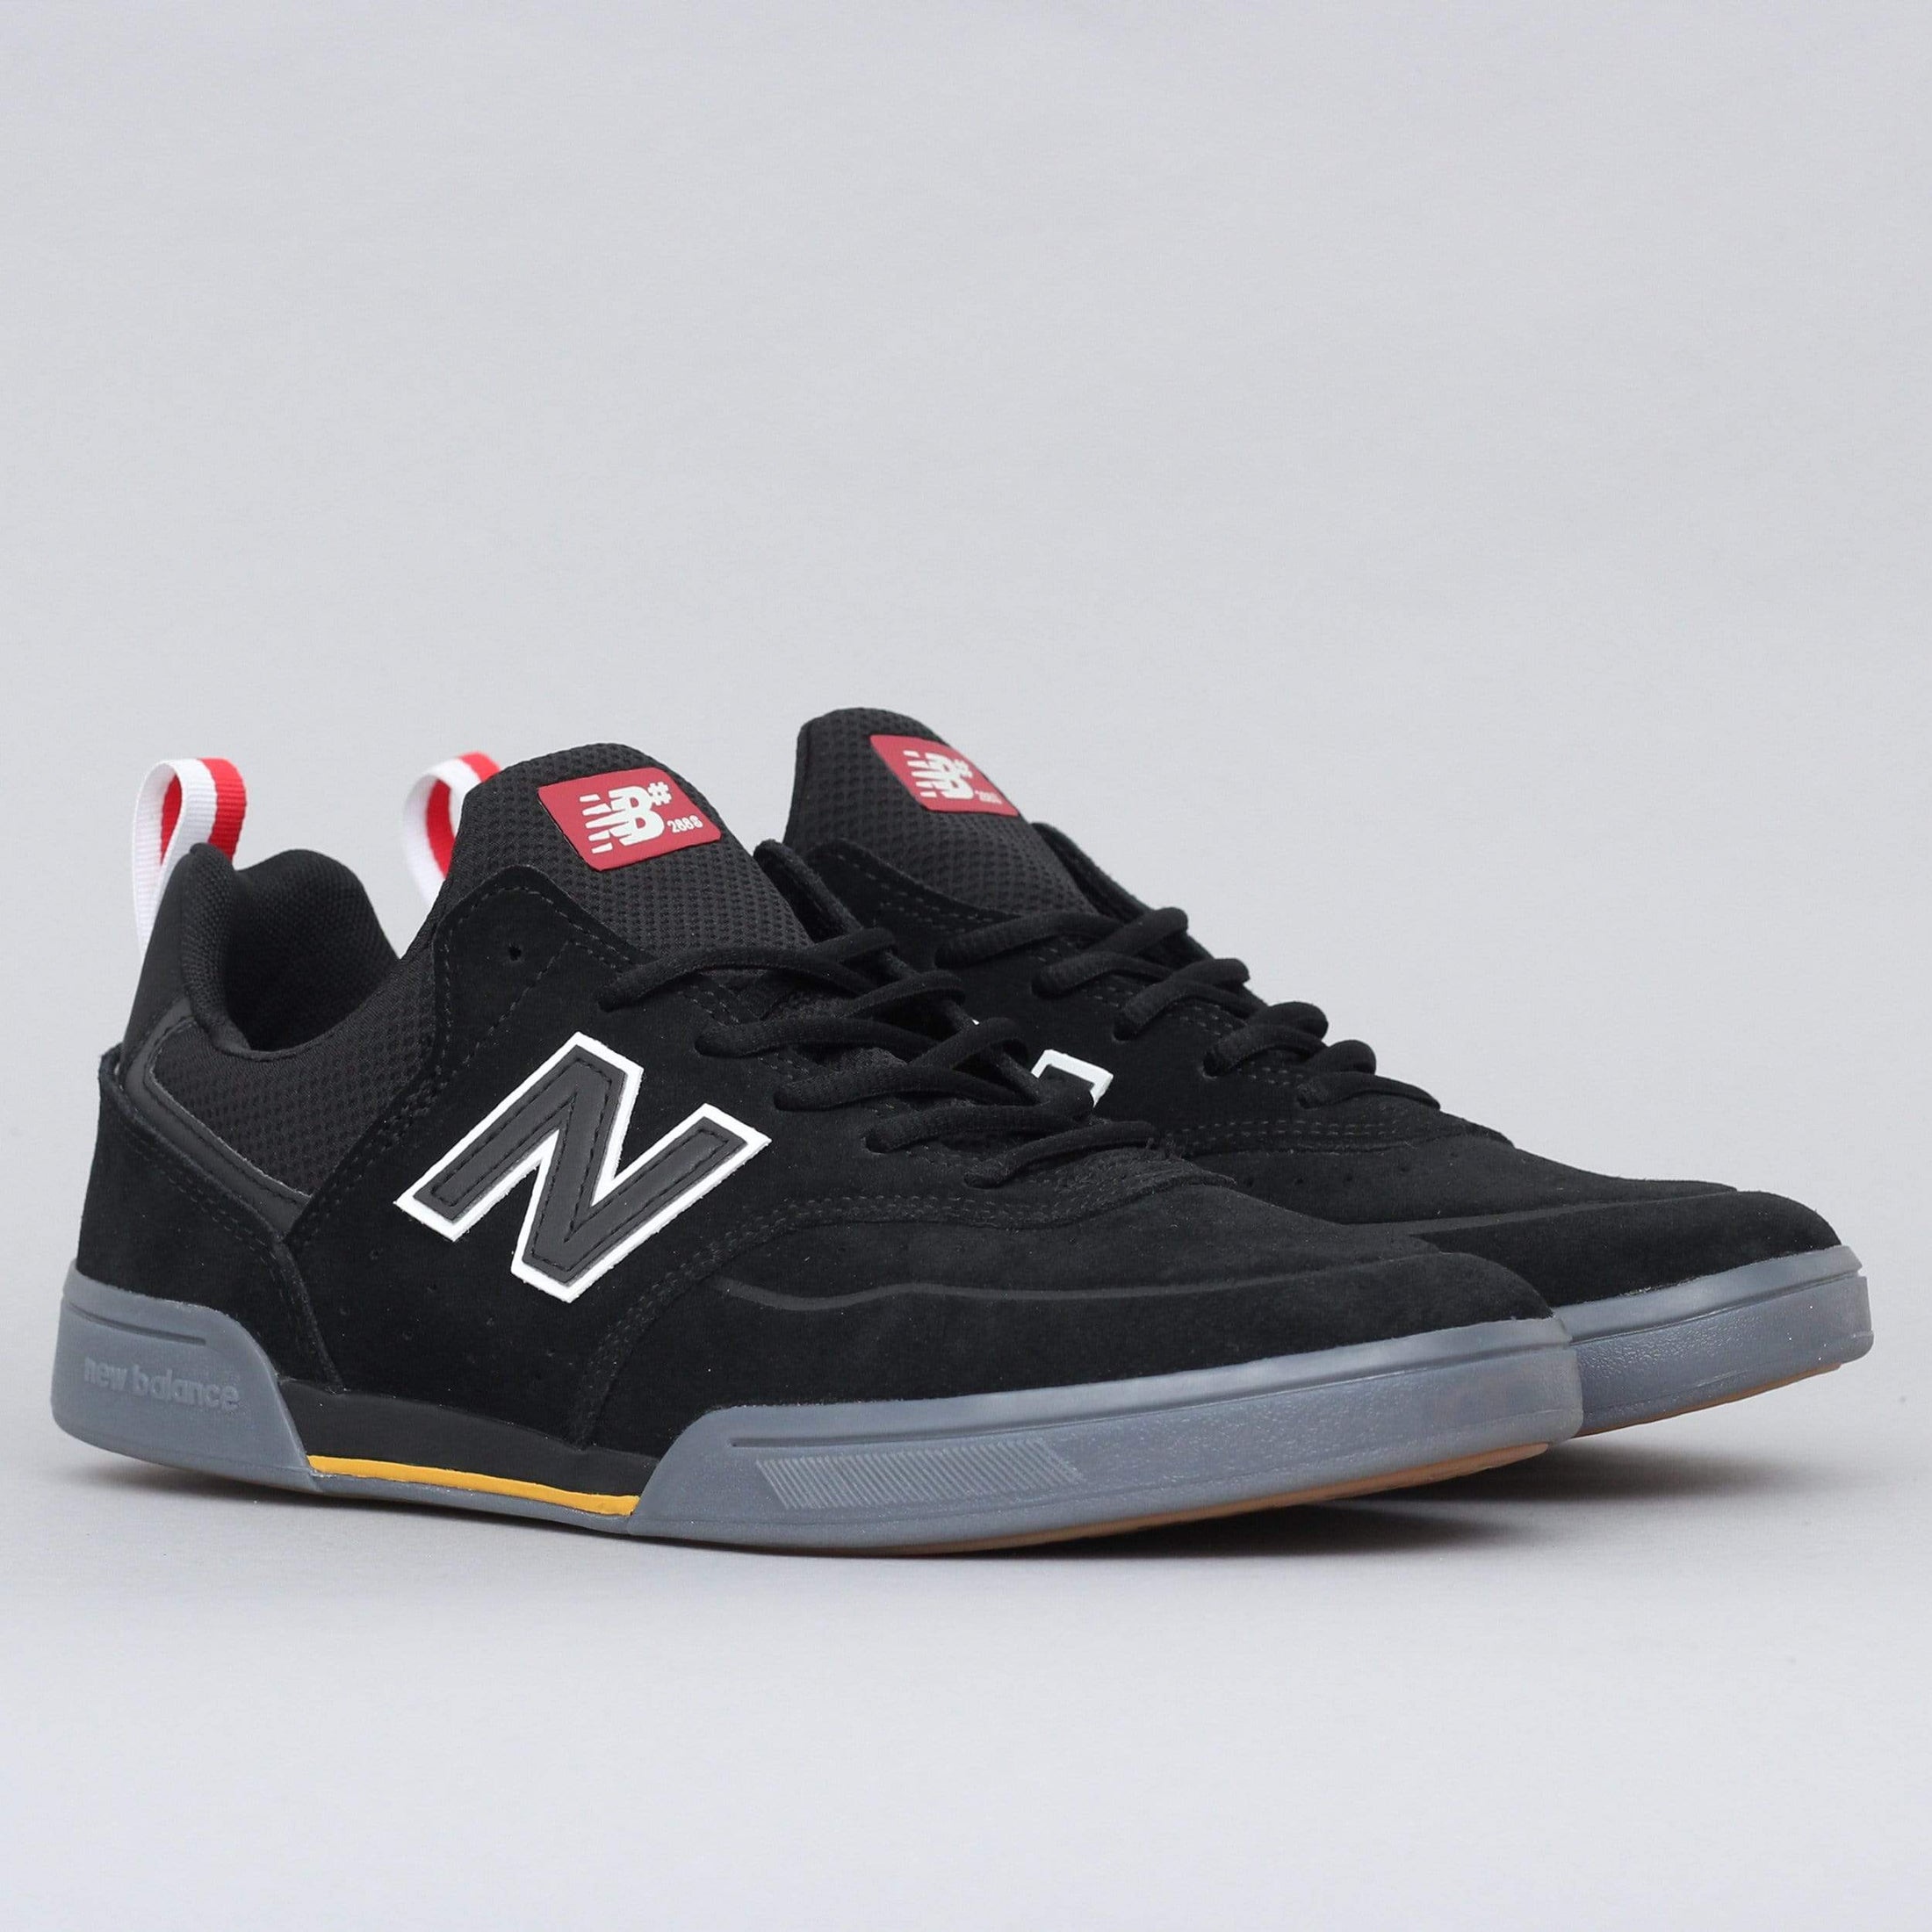 New Balance 288 Jack Curtin Shoes Black / Grey